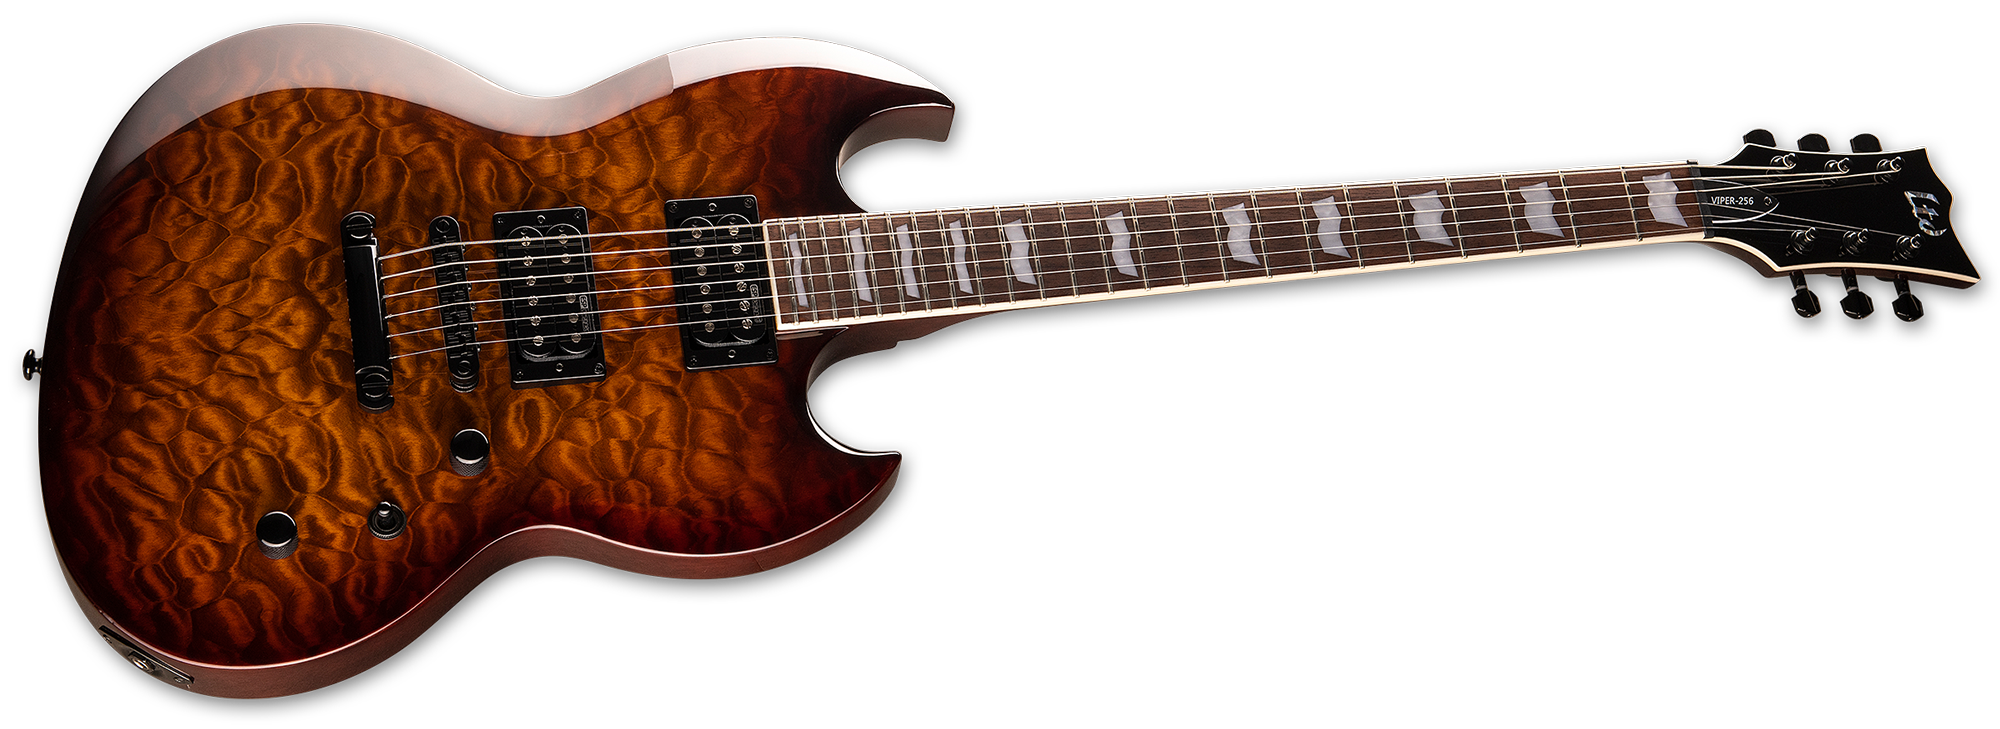 Ltd Viper-256 Hh Ht Jat - Dark Brown Sunburst - Guitarra eléctrica de doble corte. - Variation 1